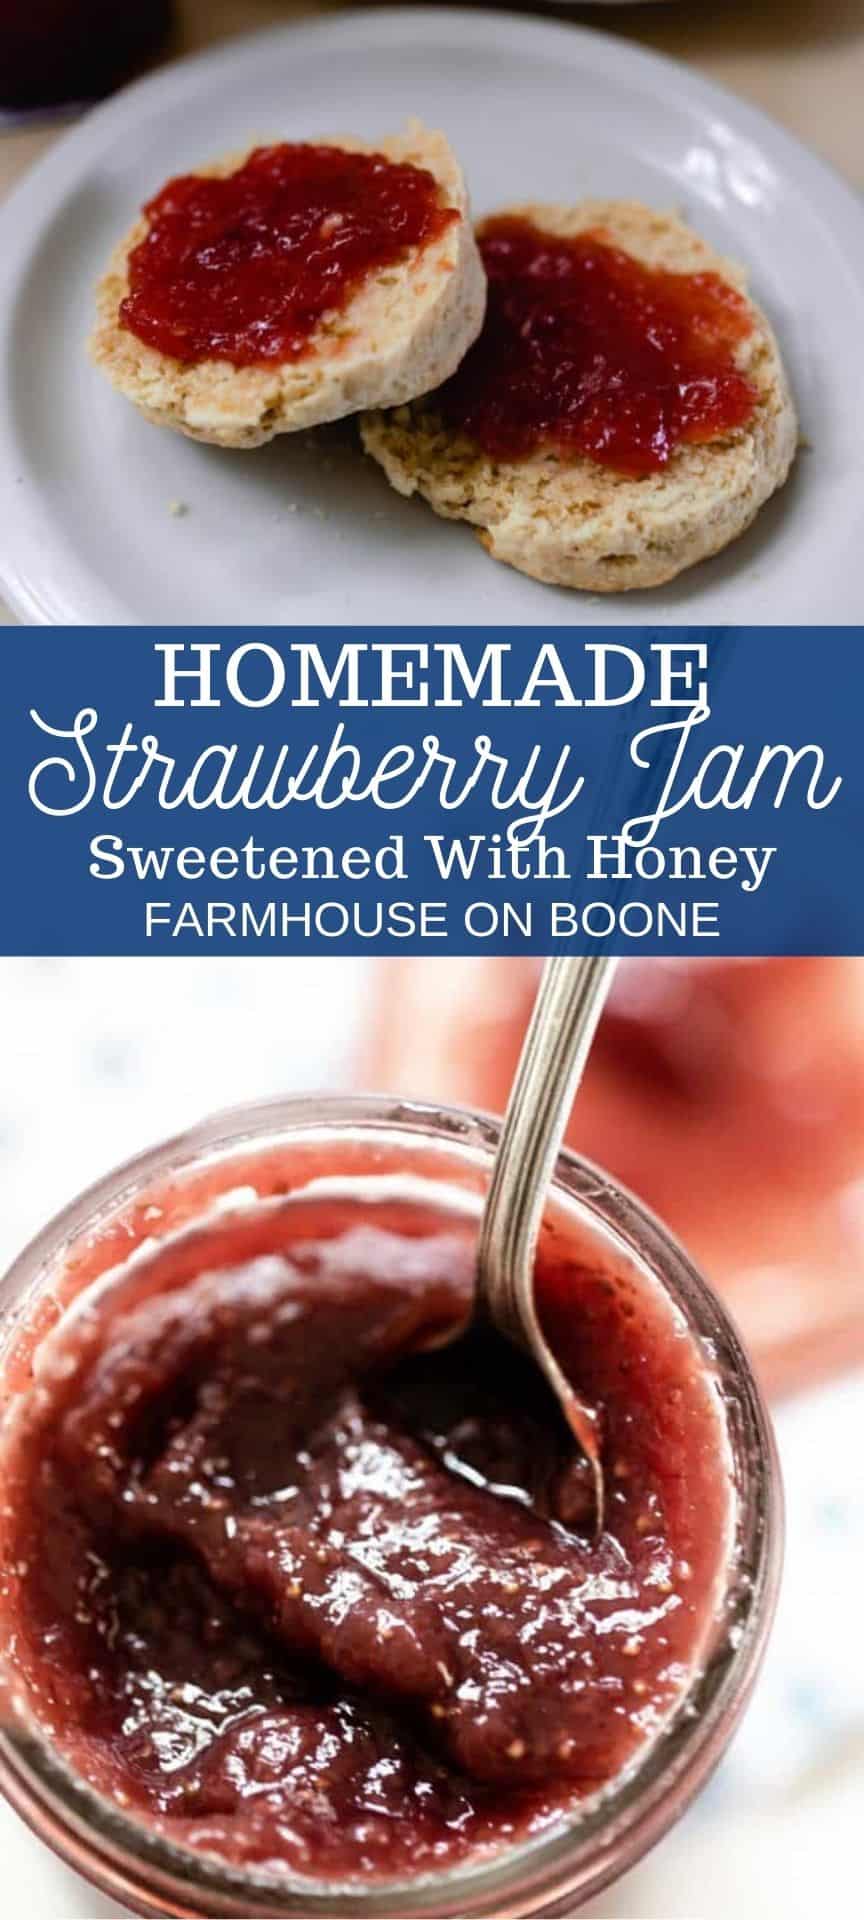 Homemade Strawberry Jam Sweetened with Honey - Farmhouse on Boone